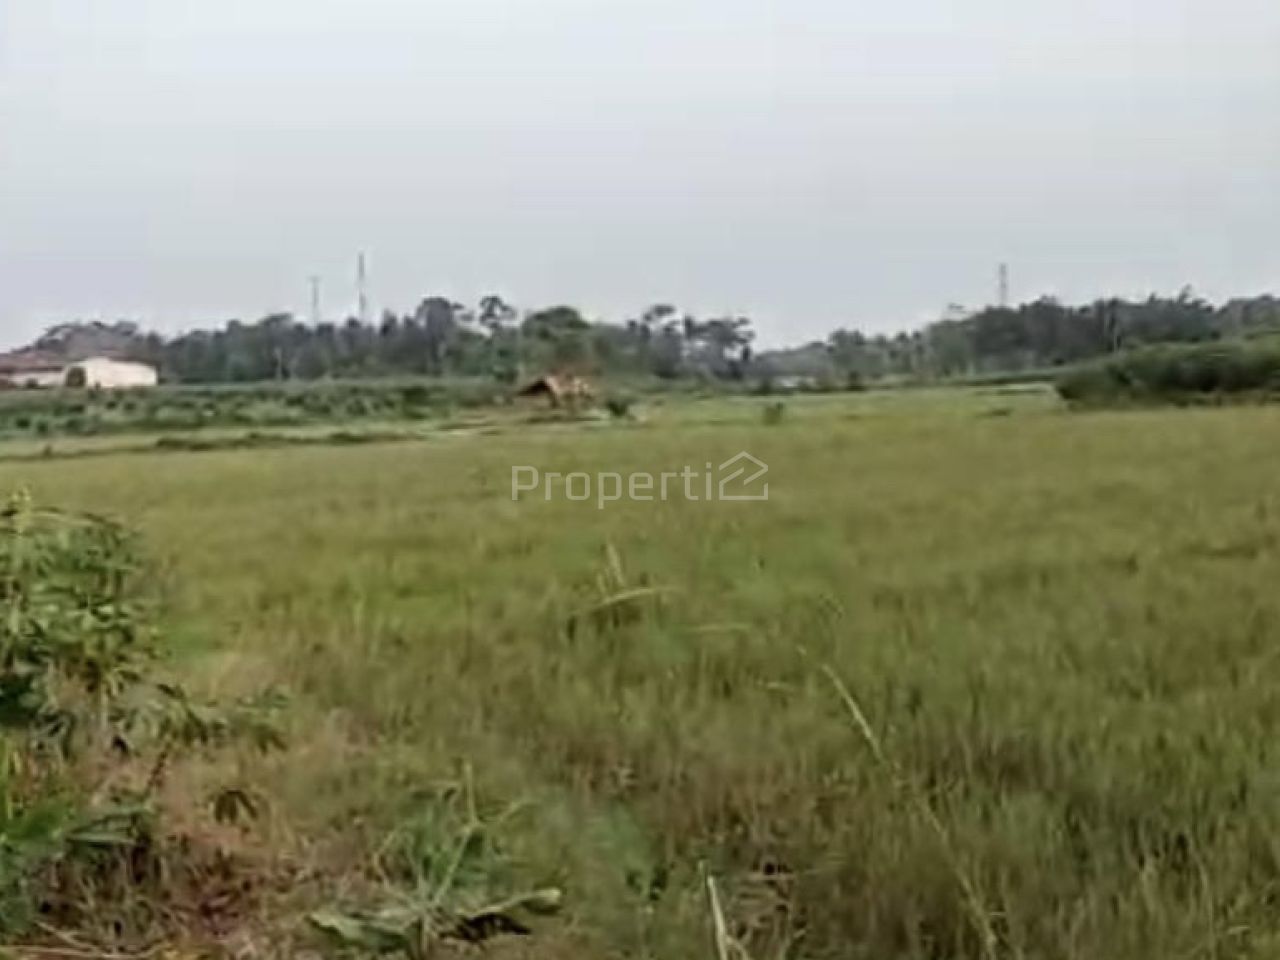 Spacious Land at Bumi Agung, Lampung, Lampung